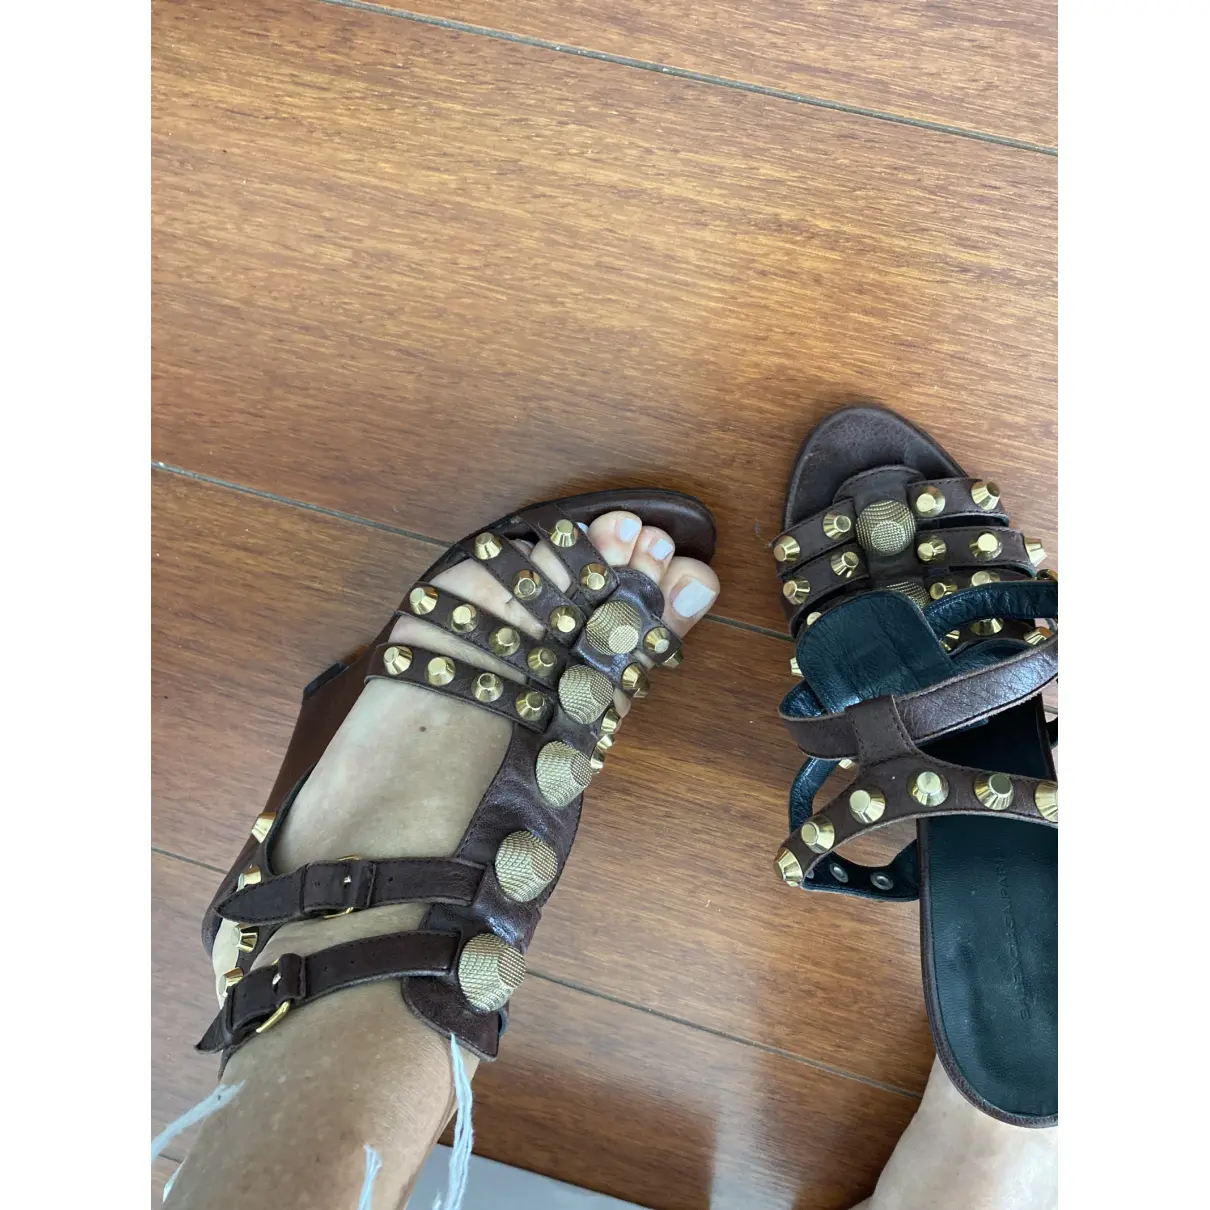 Luxury Balenciaga Sandals Women